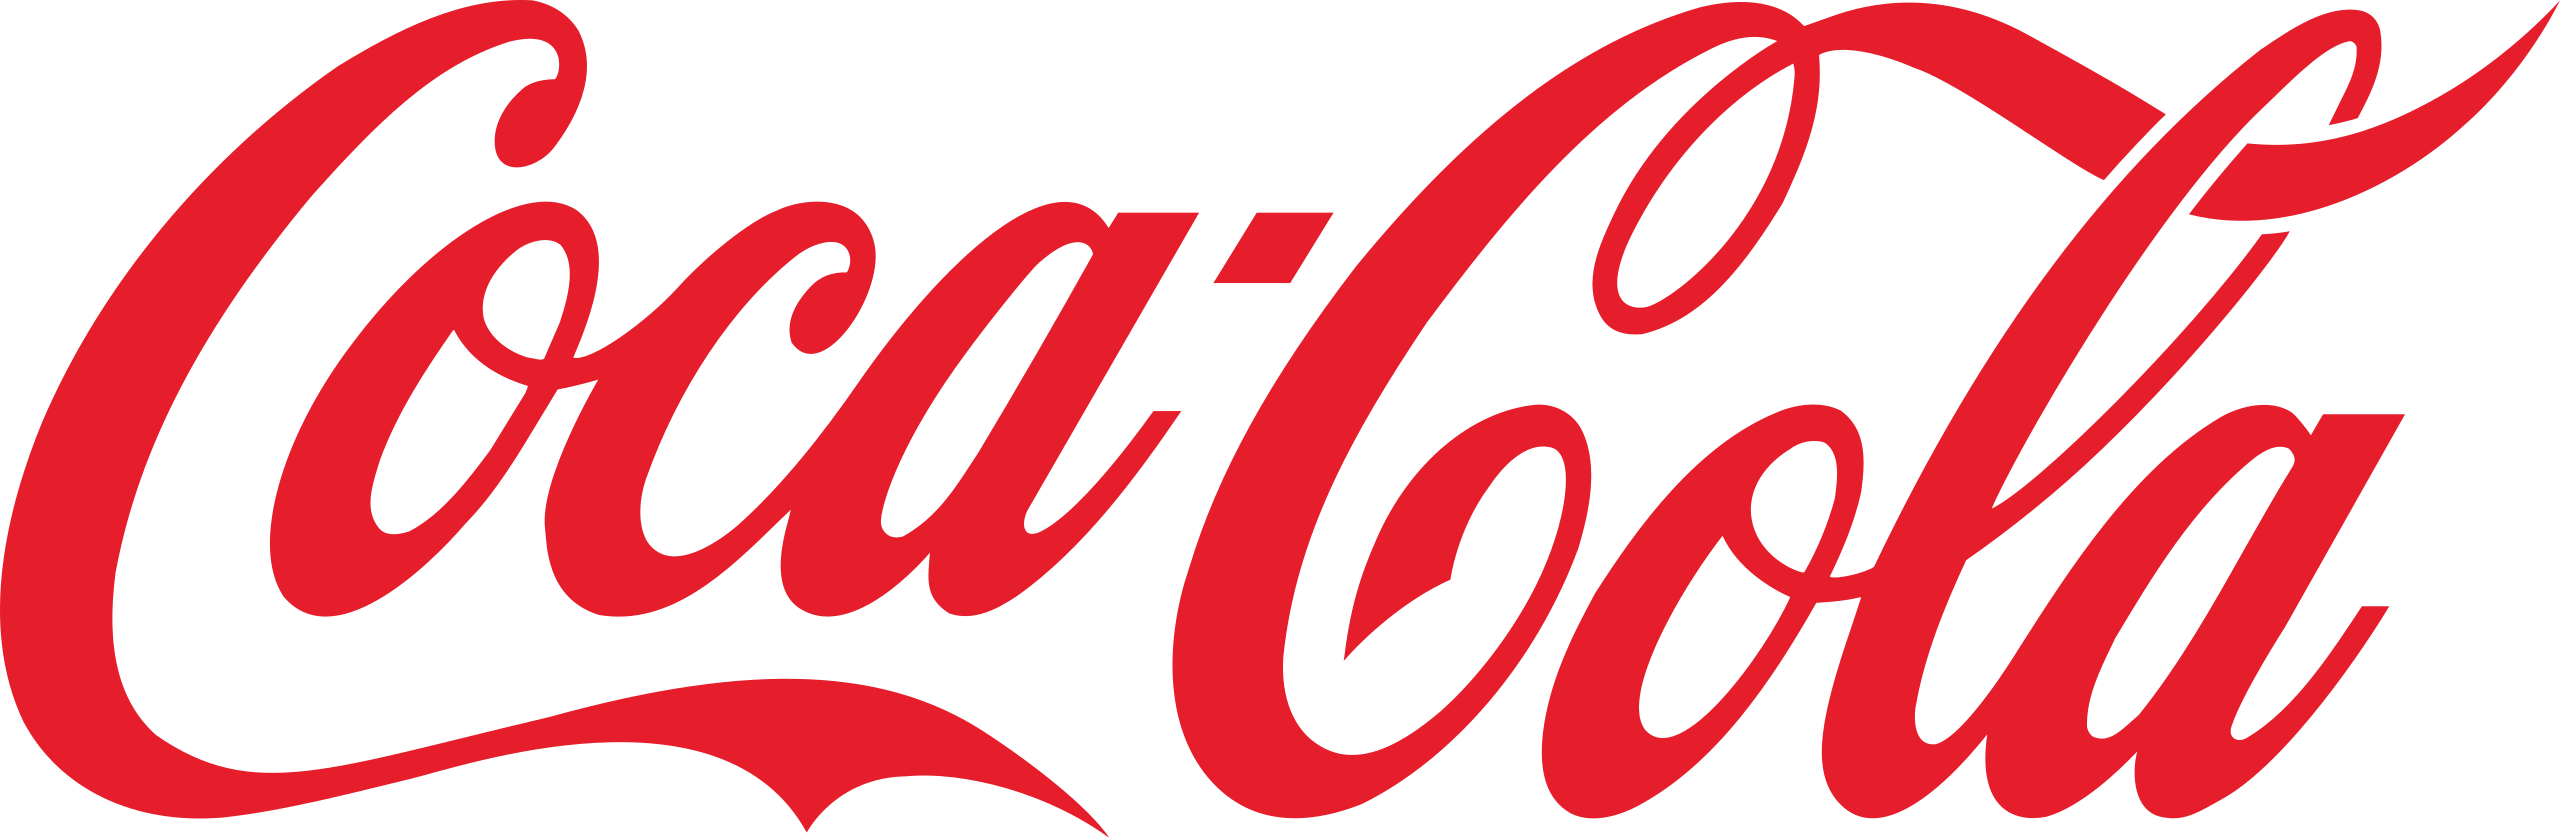 https://21372452.fs1.hubspotusercontent-na1.net/hubfs/21372452/Coca-Cola_logo.png